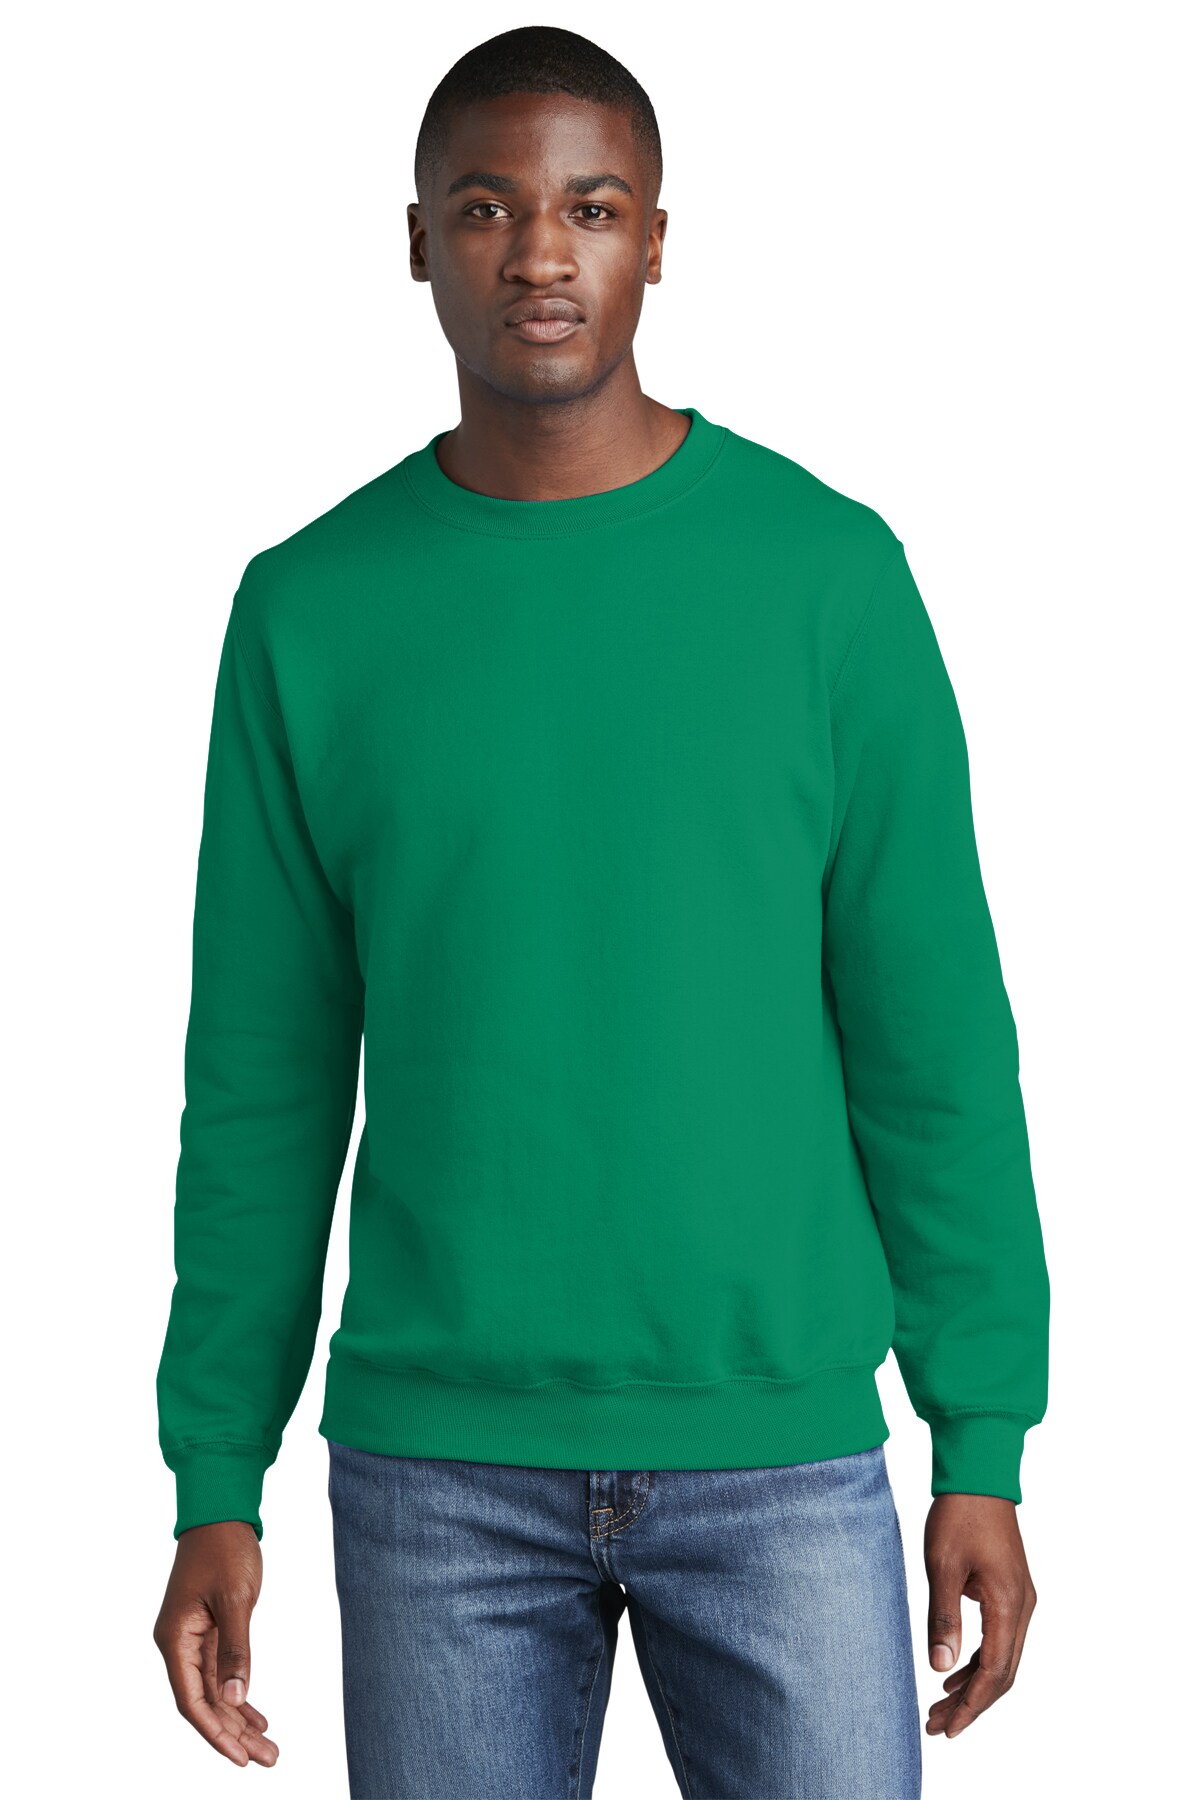 Premium Fleece Crewneck Sweatshirts | Experience the Perfect Blend of ...